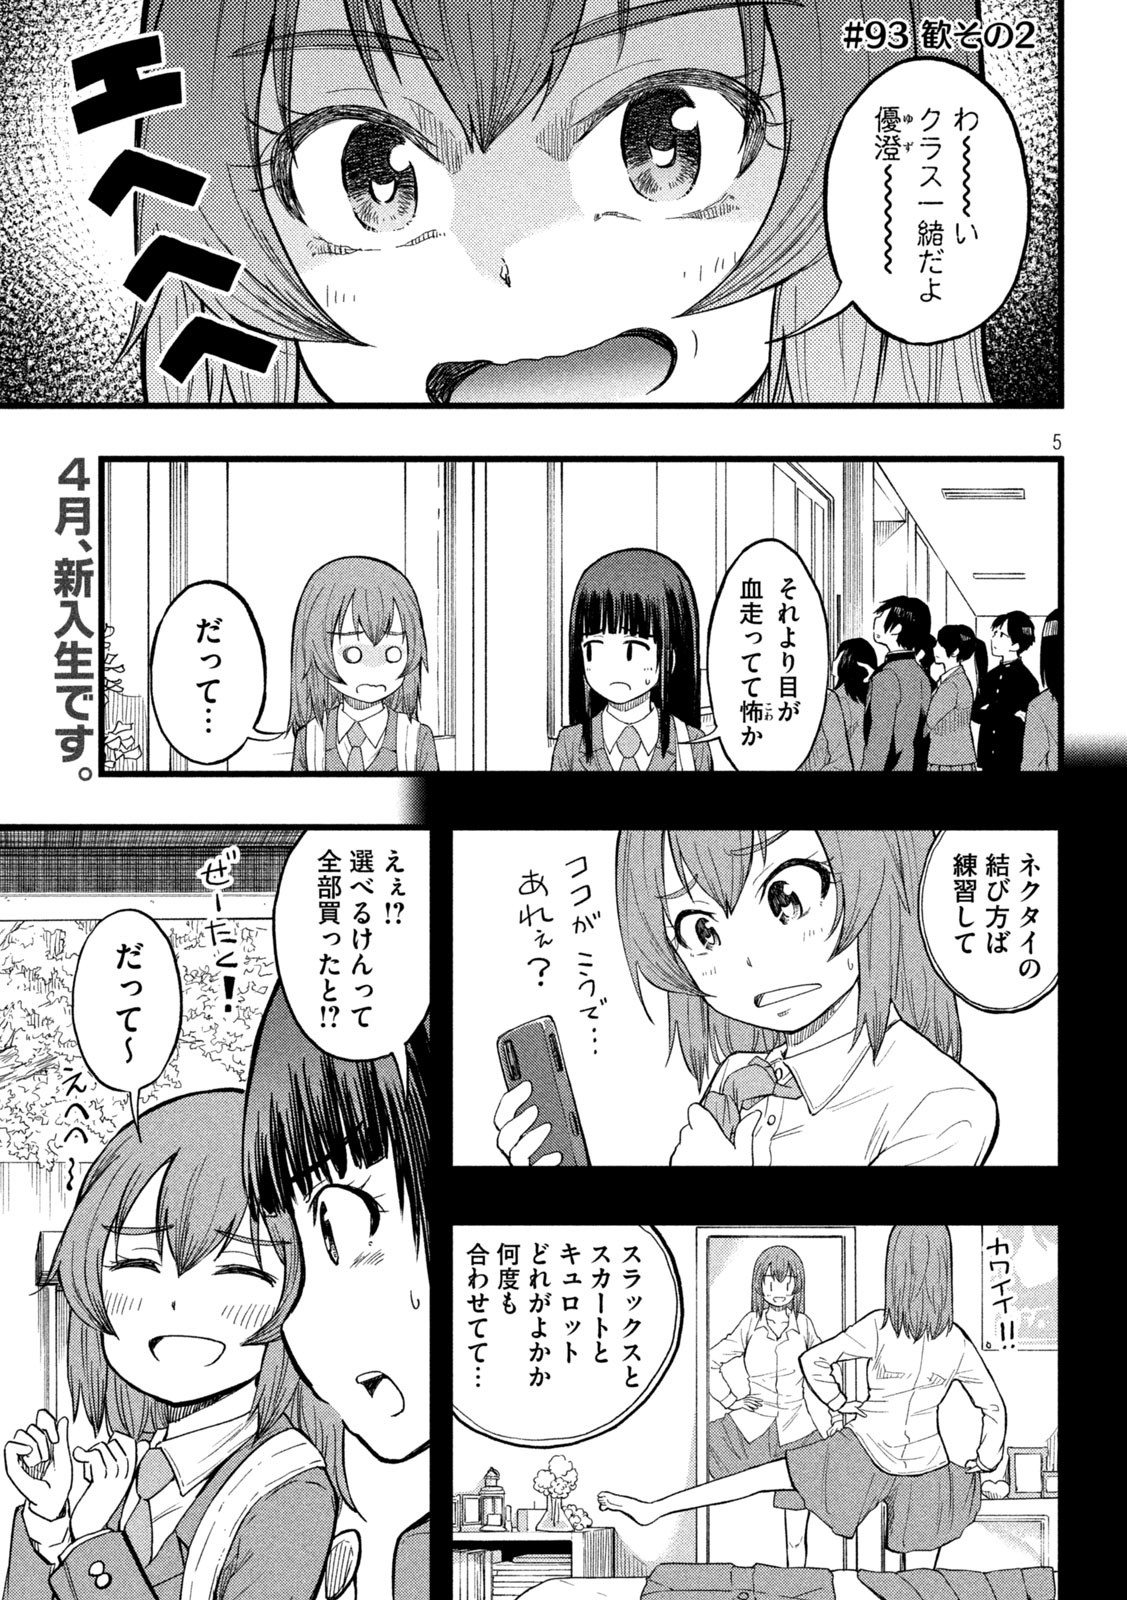 Koharu haru! - Chapter 93 - Page 1